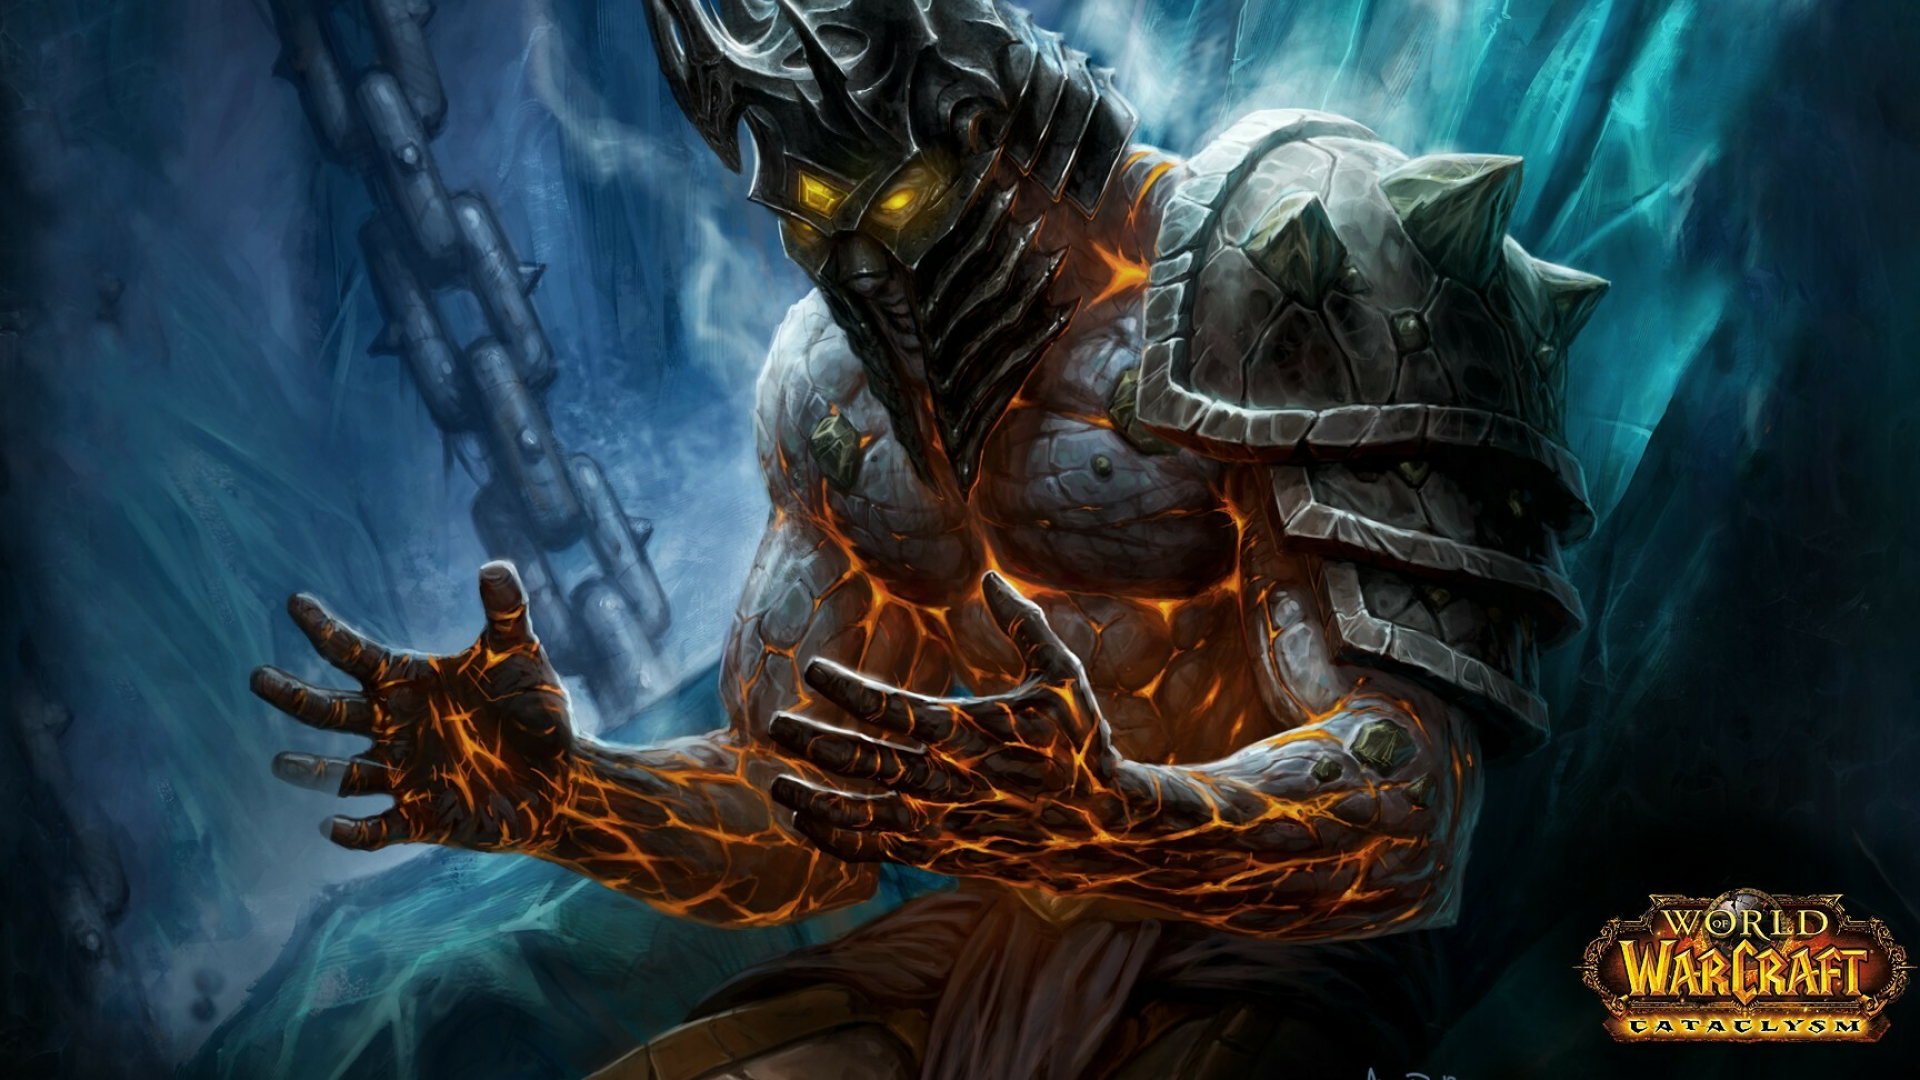 World of Warcraft: Cataclysm, Released in December 2010, Bolvar Fordragon. 1920x1080 Full HD Wallpaper.